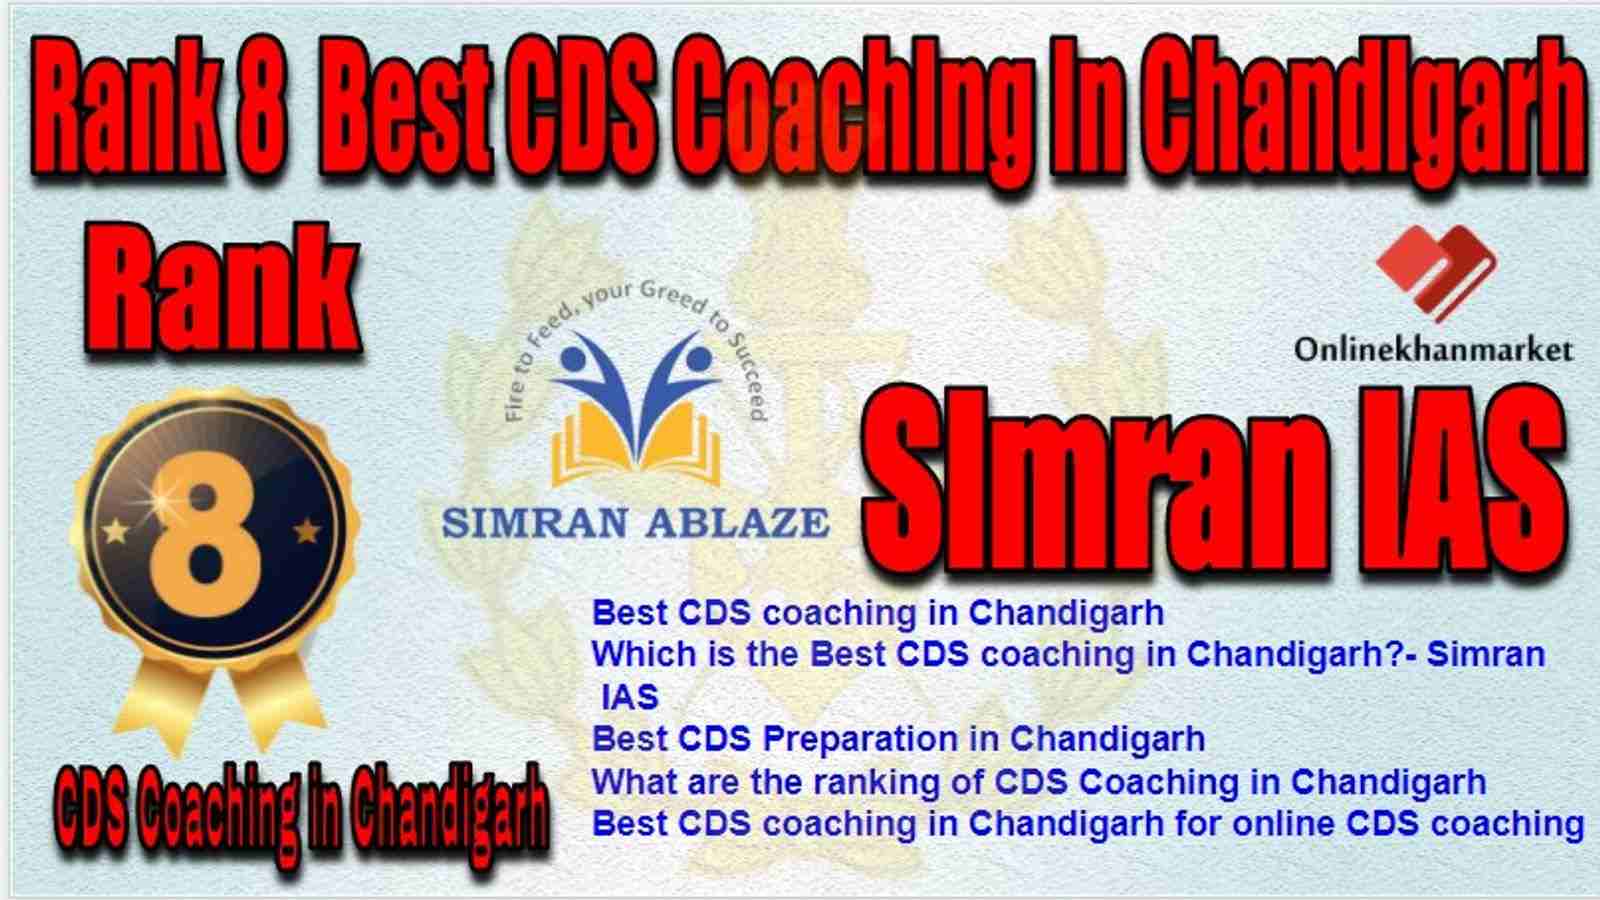 Rank 8 Best CDS Coaching in chandigarh